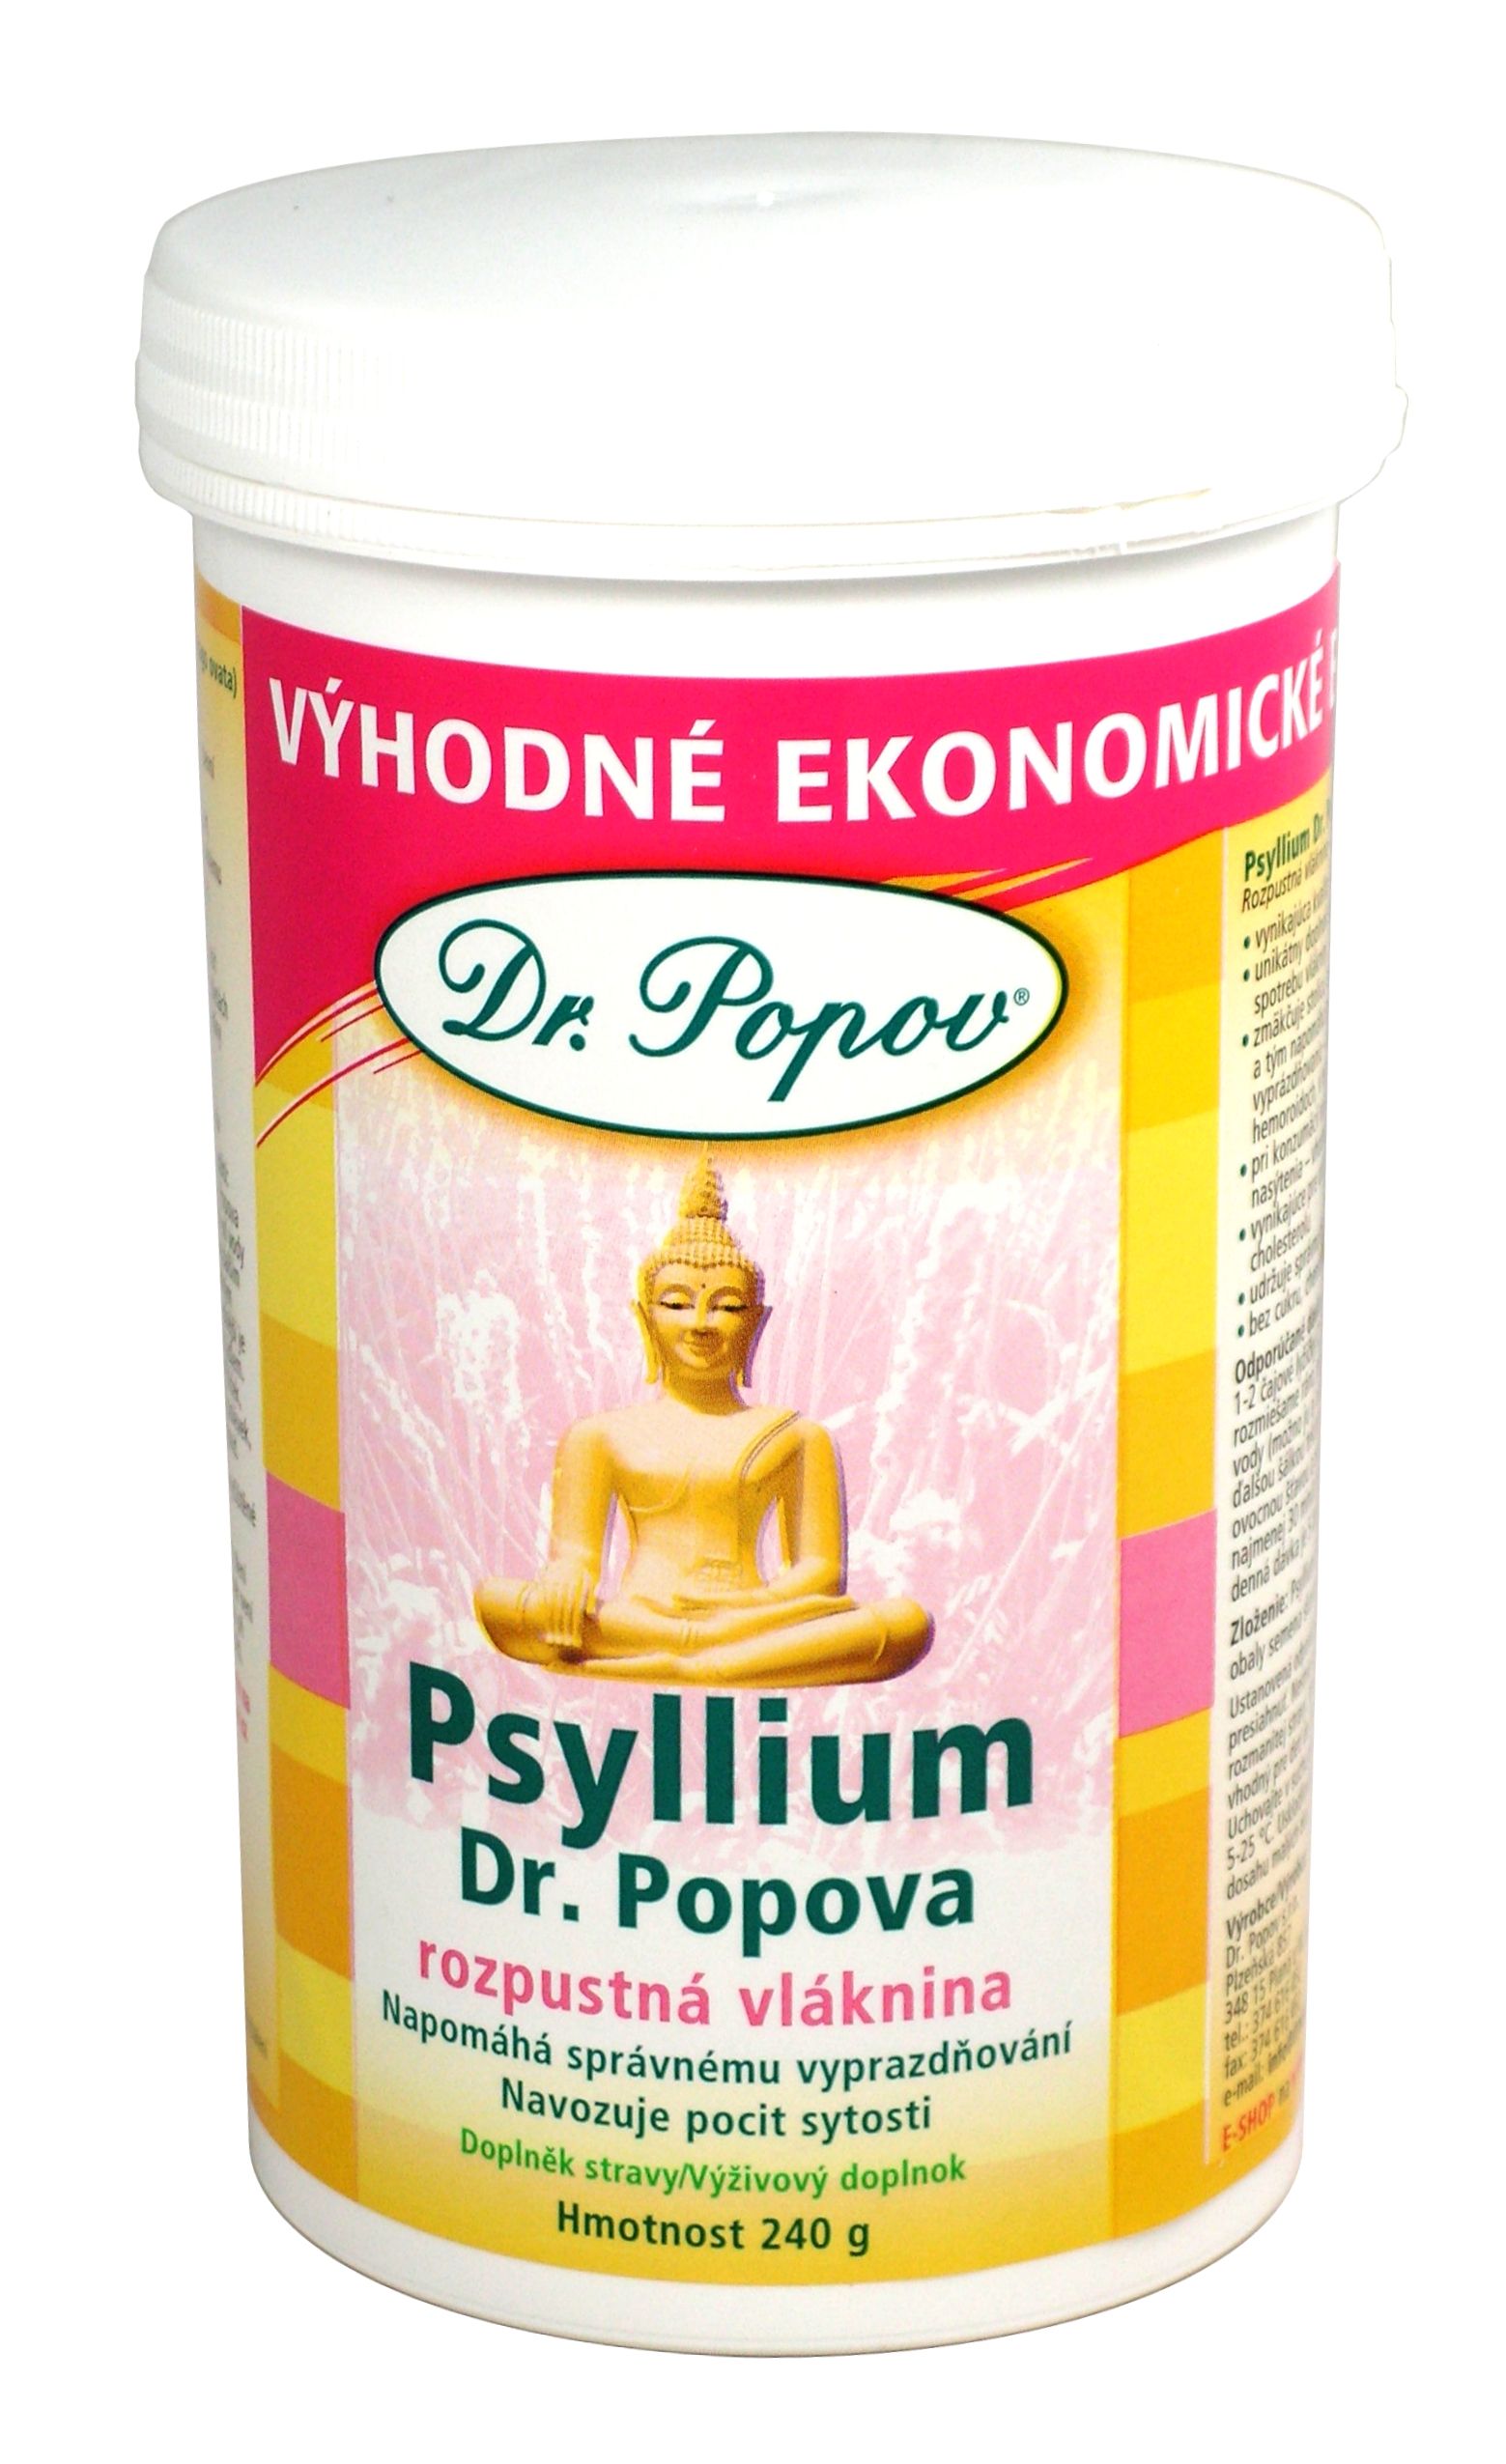 Dr. Popov Psyllium indická rozpustná vláknina 240 g Dr. Popov